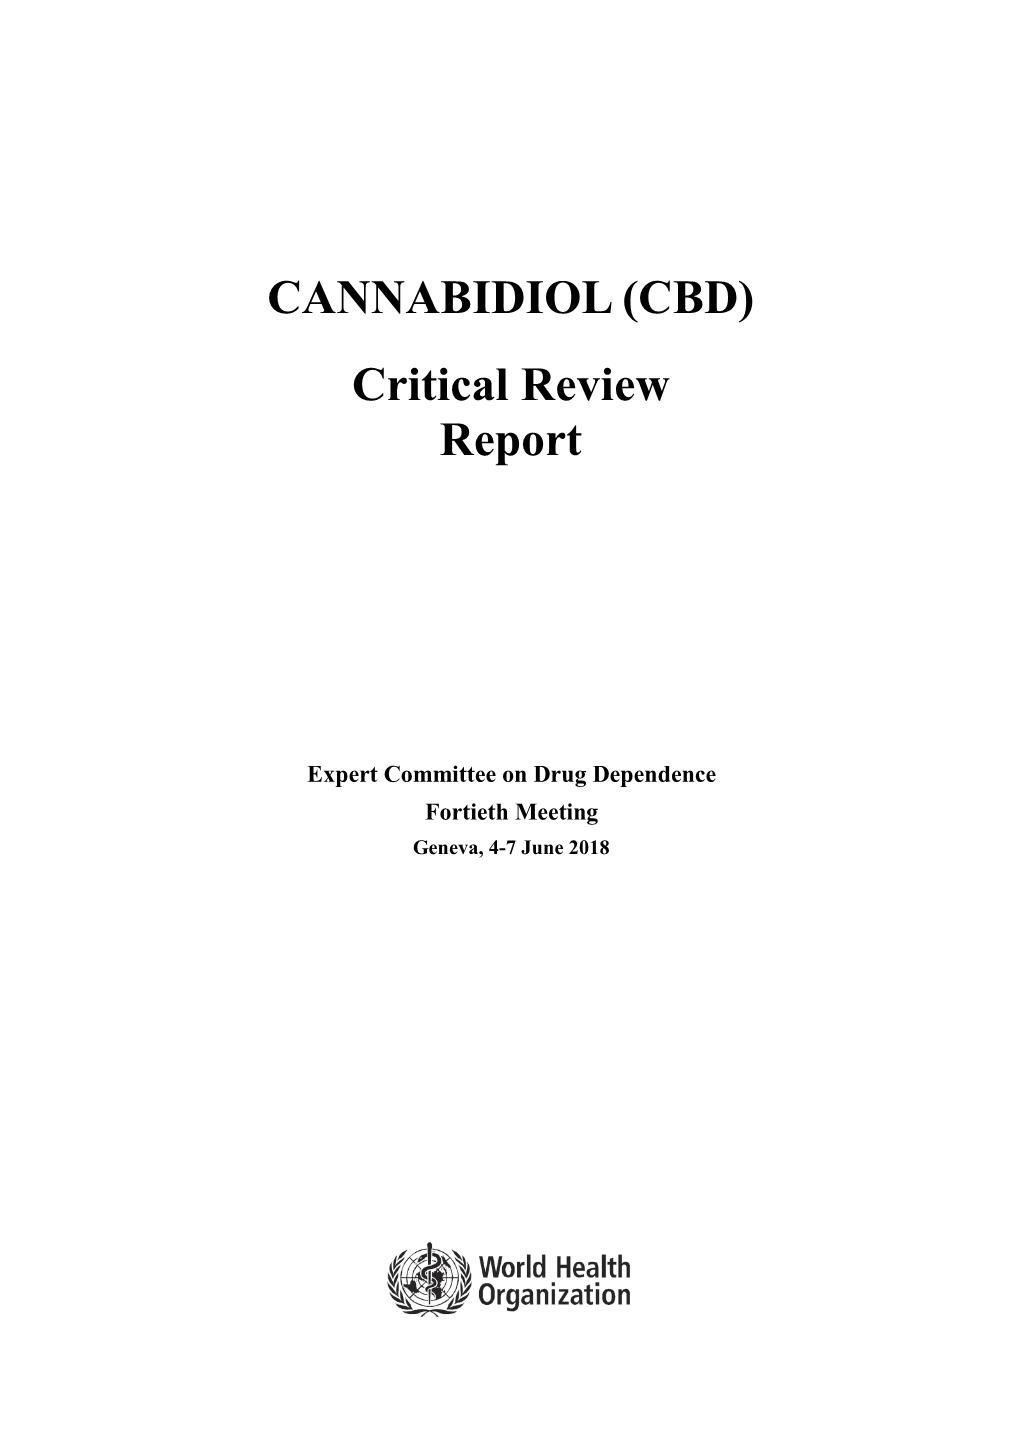 Cannabidiol (CBD) Critical Review Report